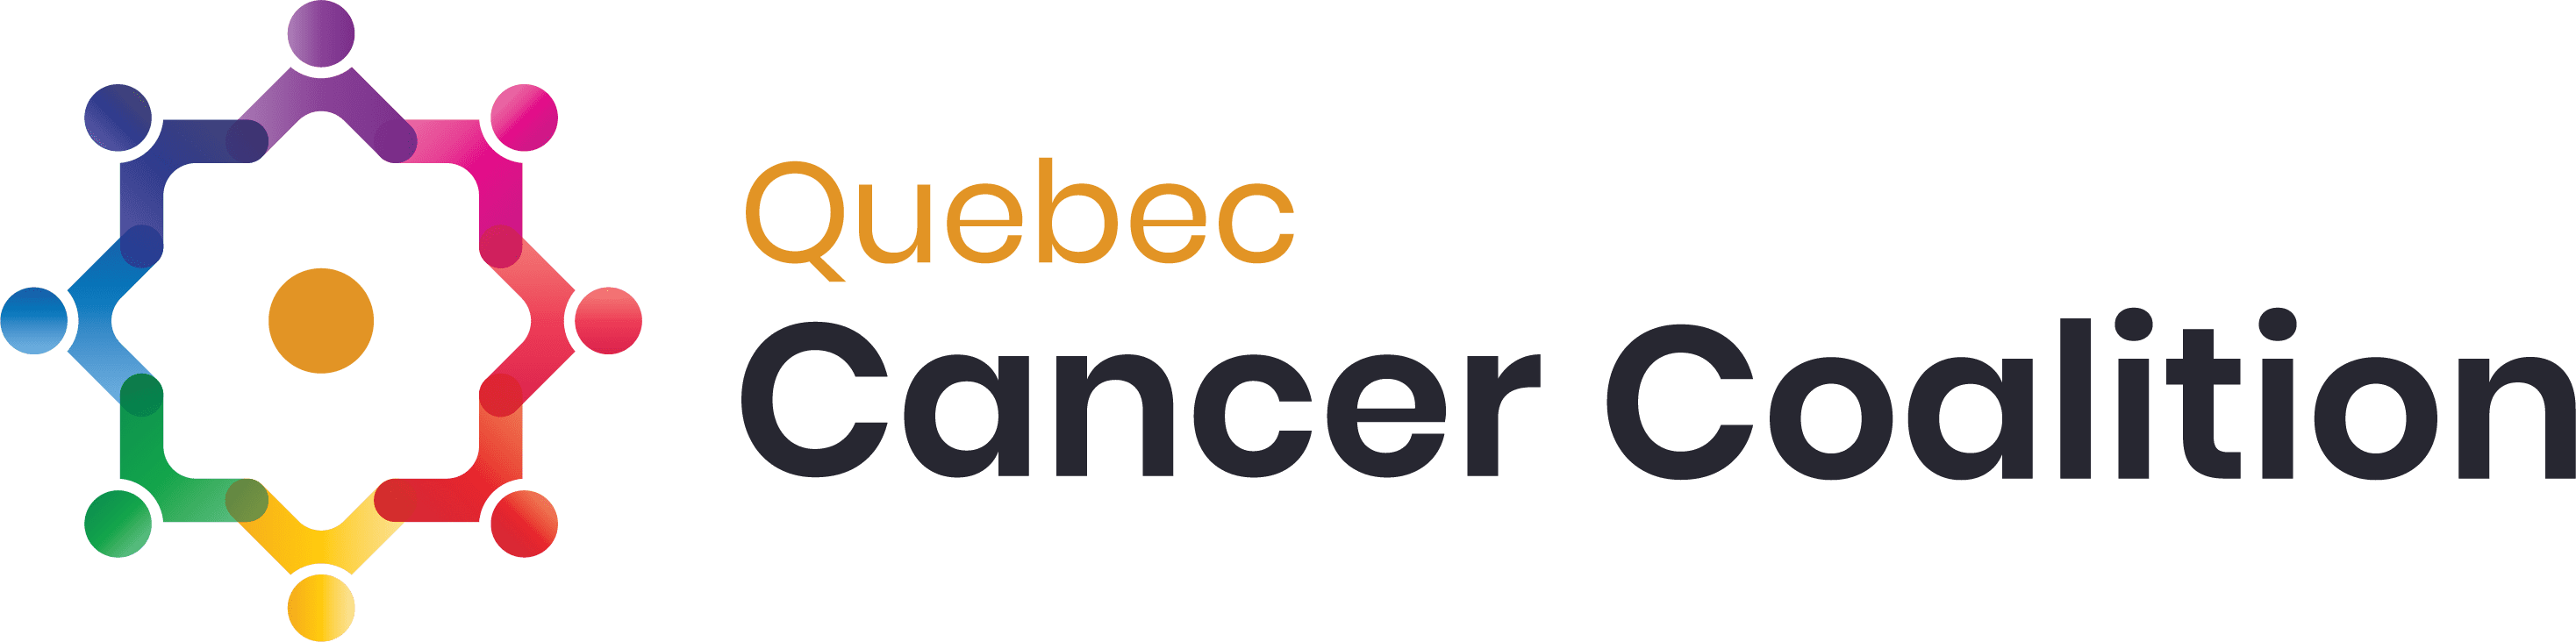 Quebec Cancer Coalition